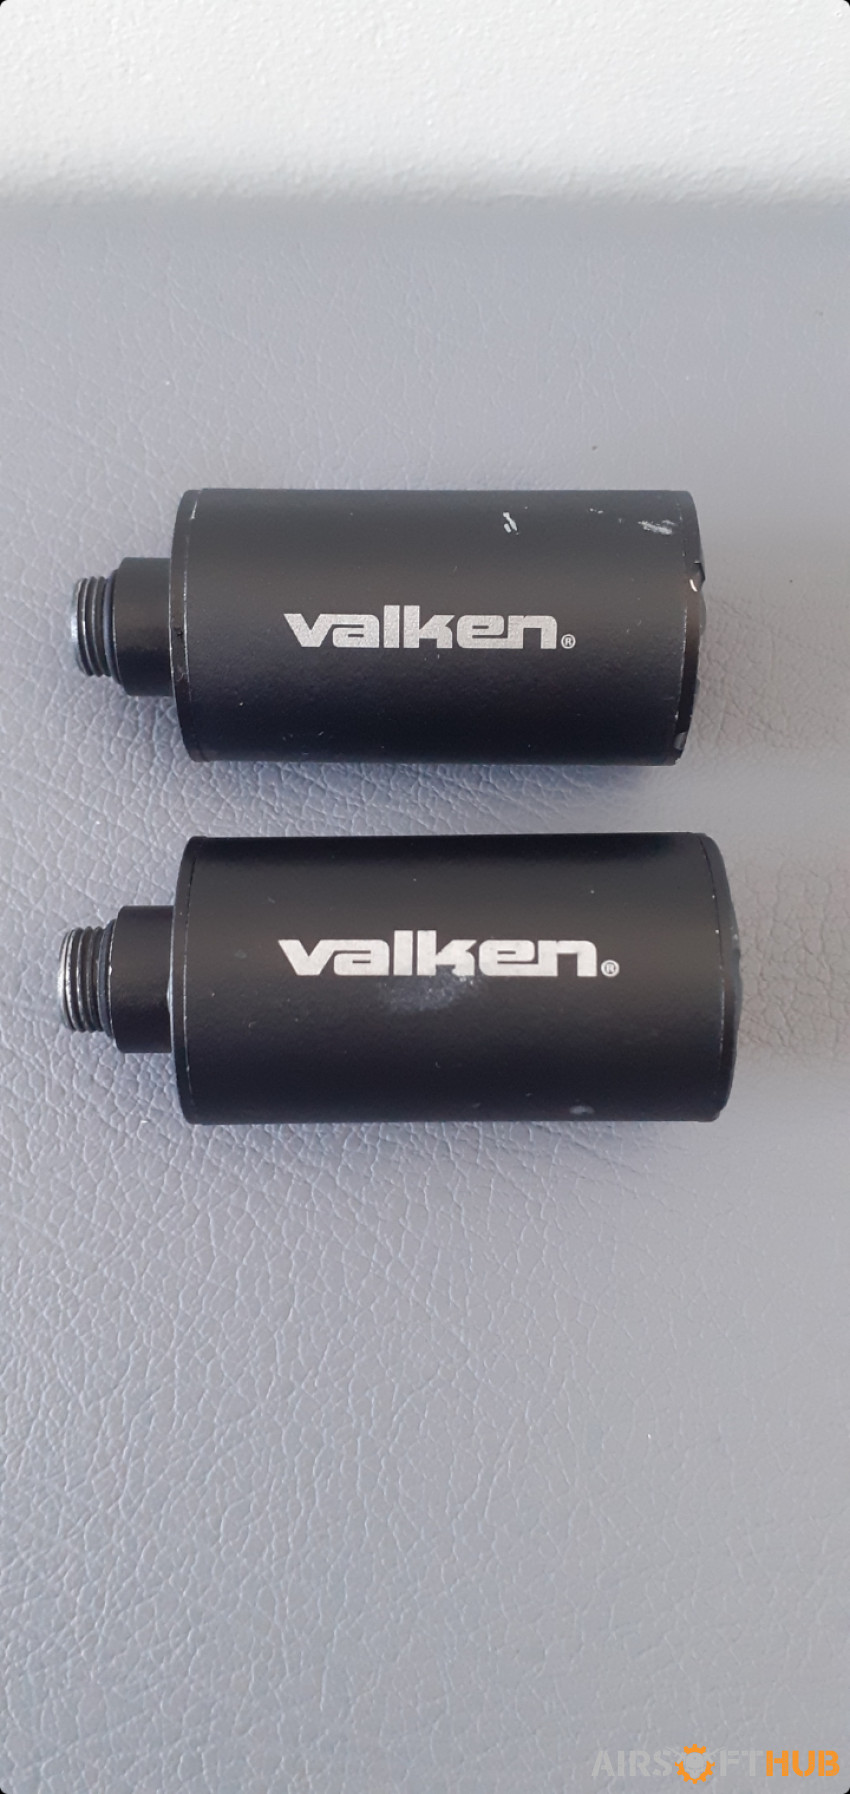 Valken Kilo Tracer Unit - Used airsoft equipment